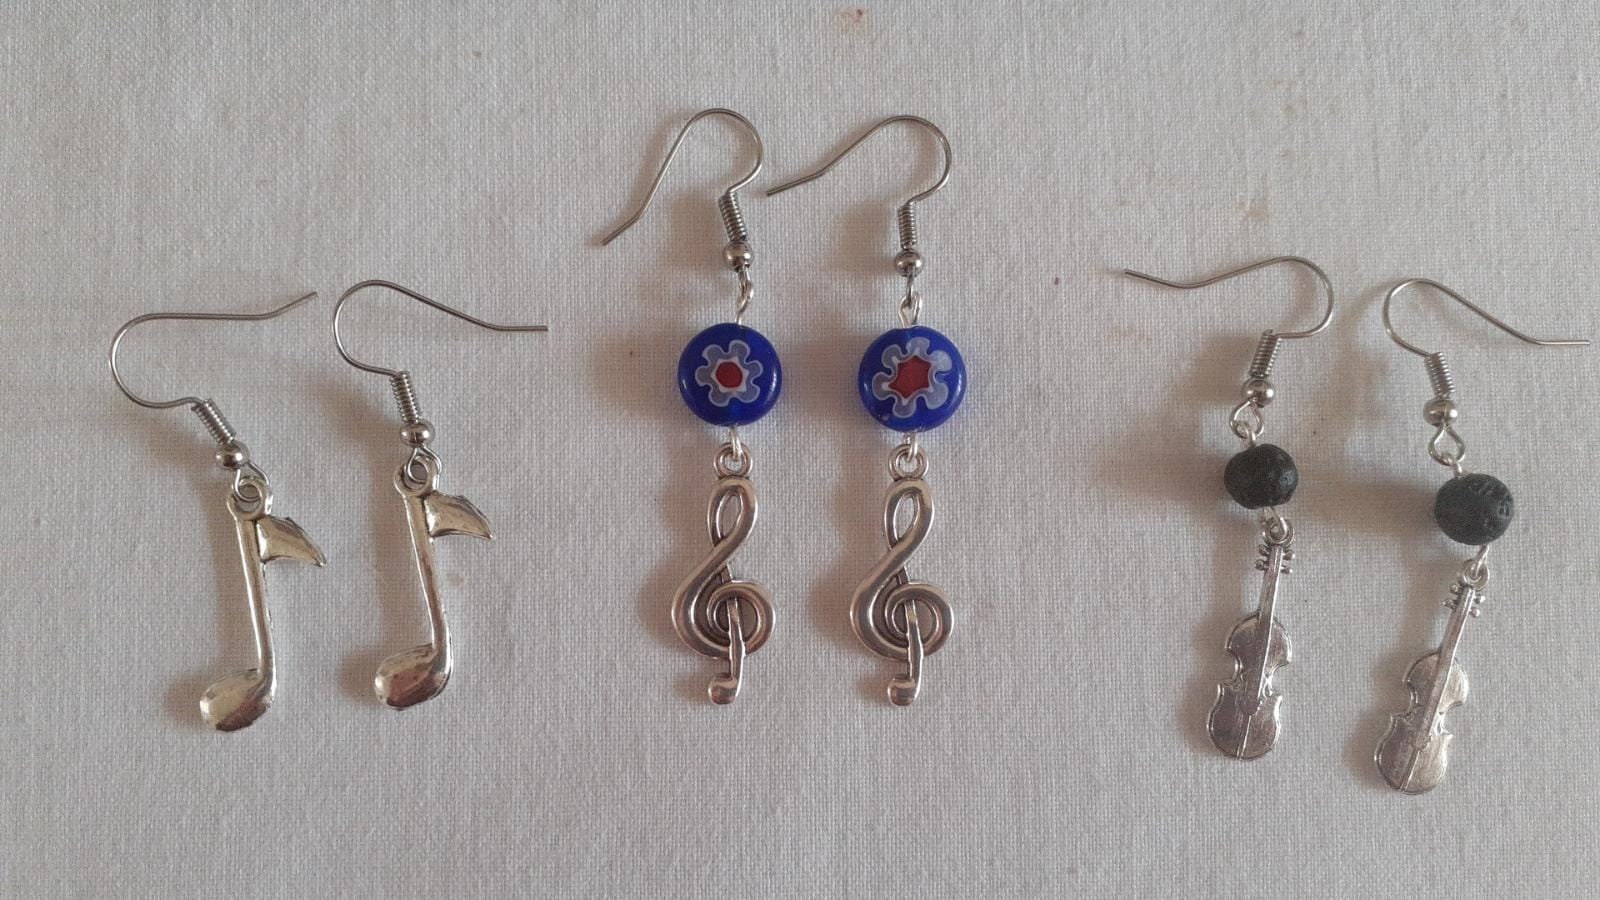 5 Handmade Thread Earrings | How To Make Thread Earrings At Home | DIY |  Creation&you - YouTube | Diy lace earrings, Diy thread earrings, Thread  earrings